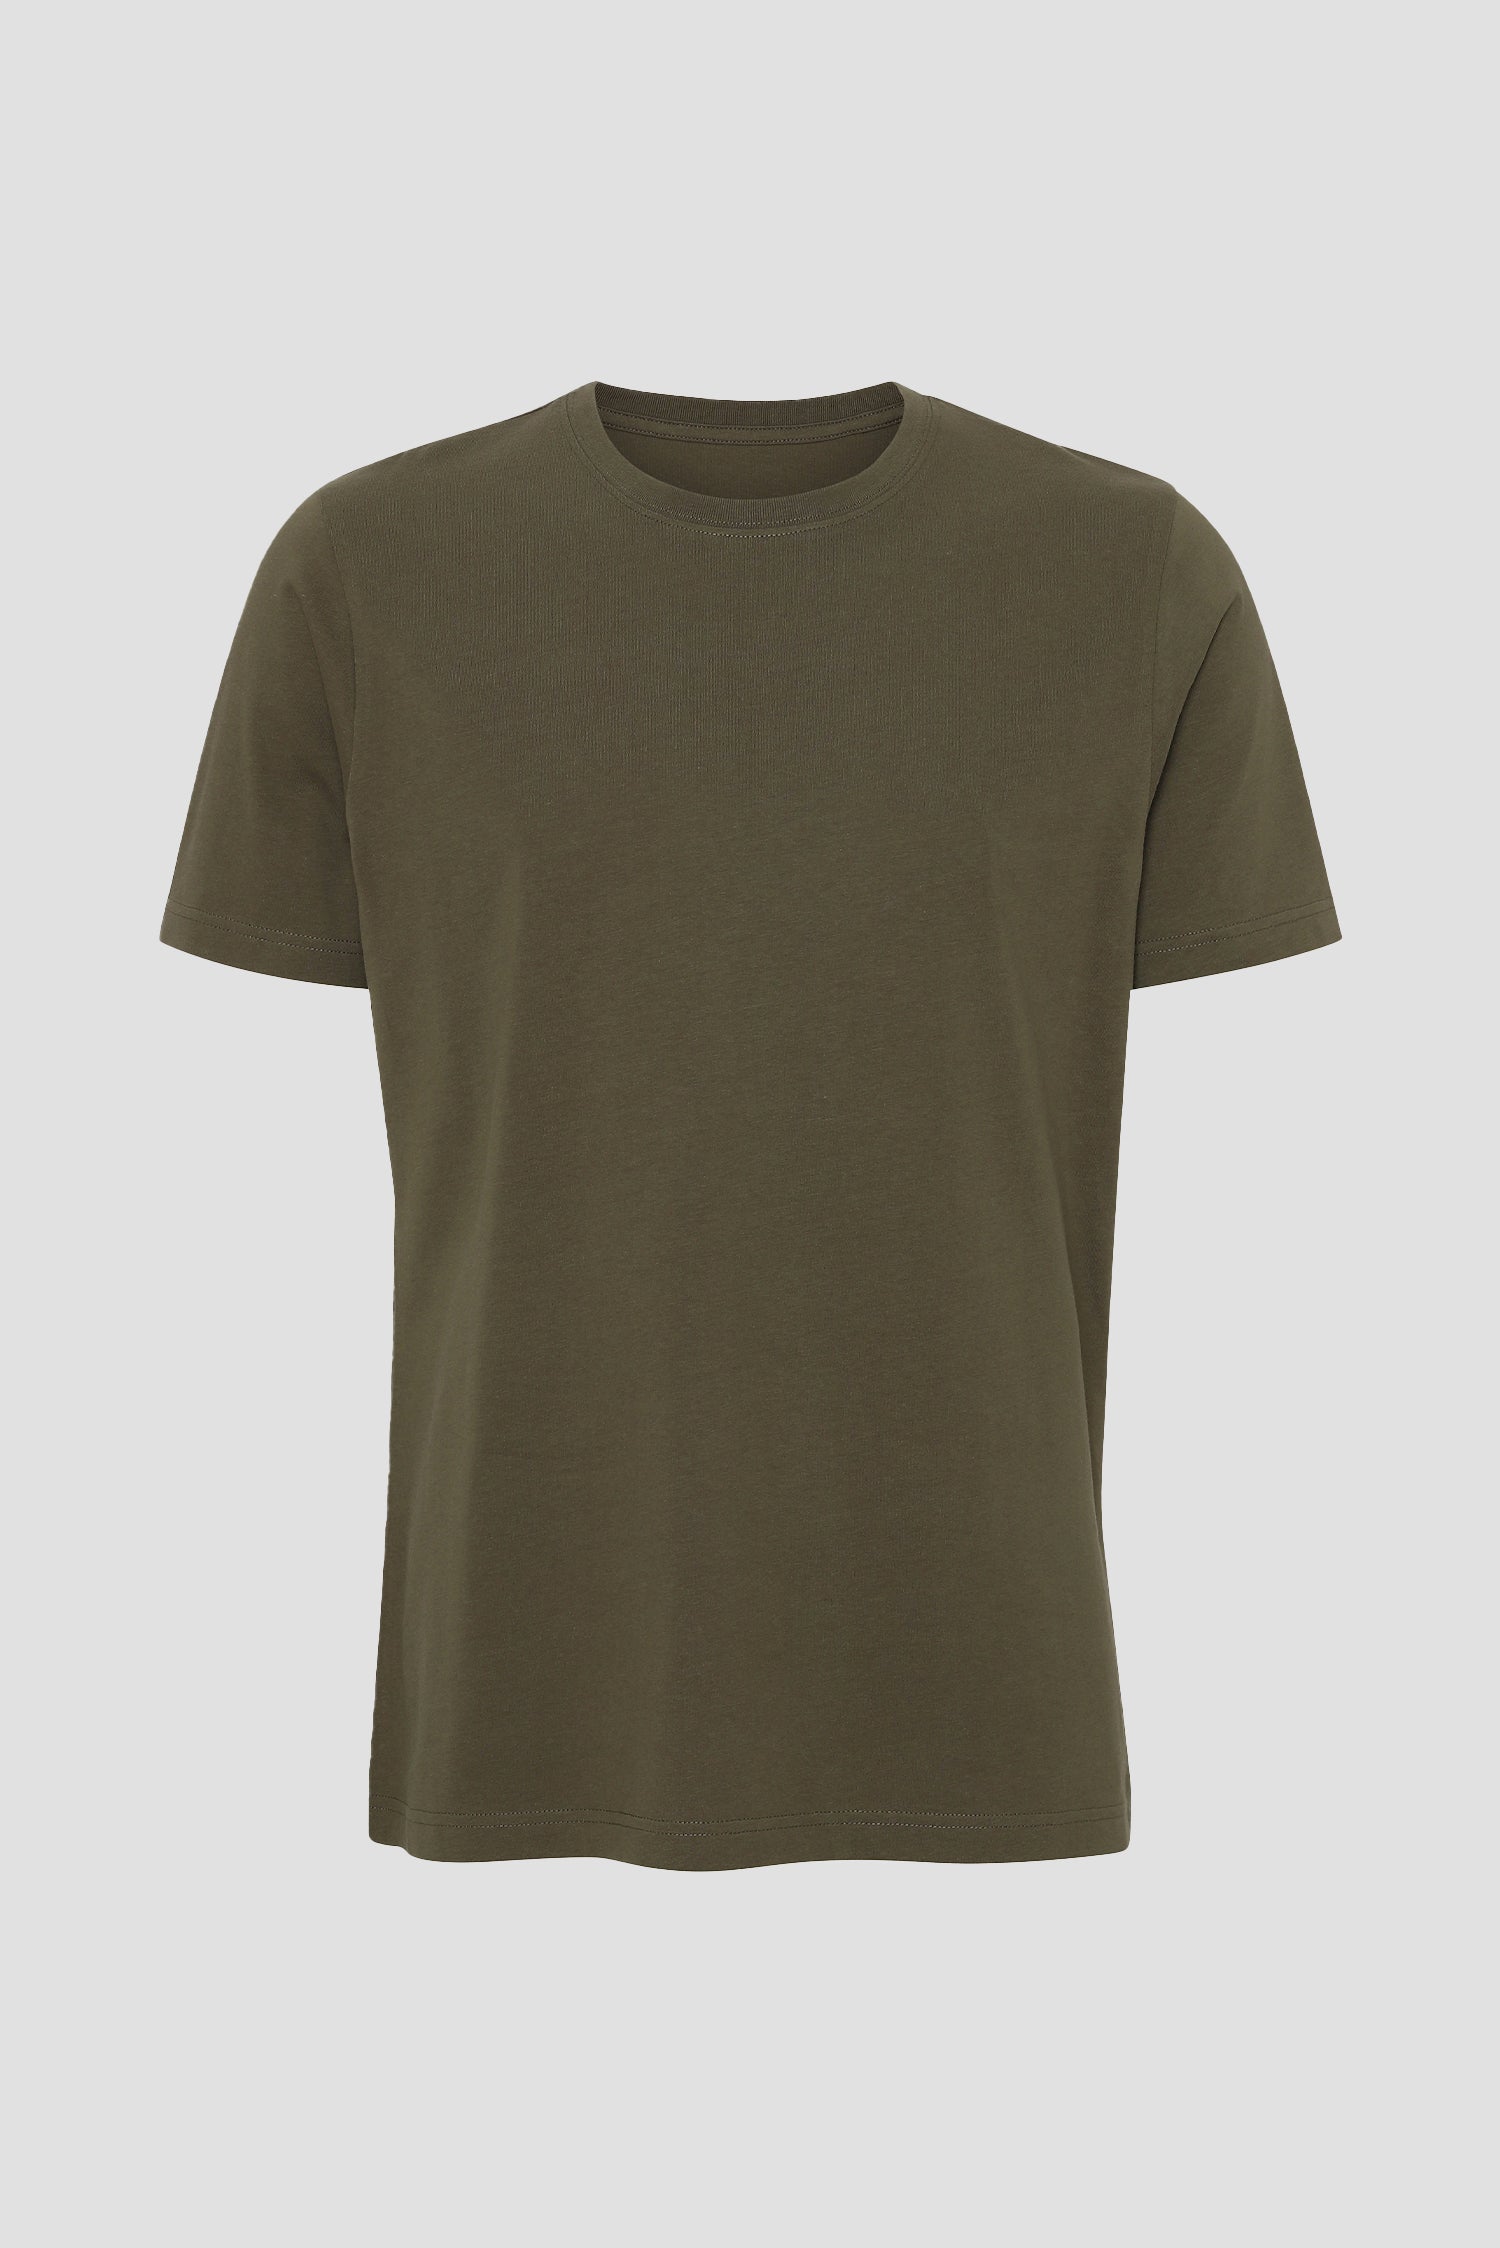 basic t-shirt army mood minor